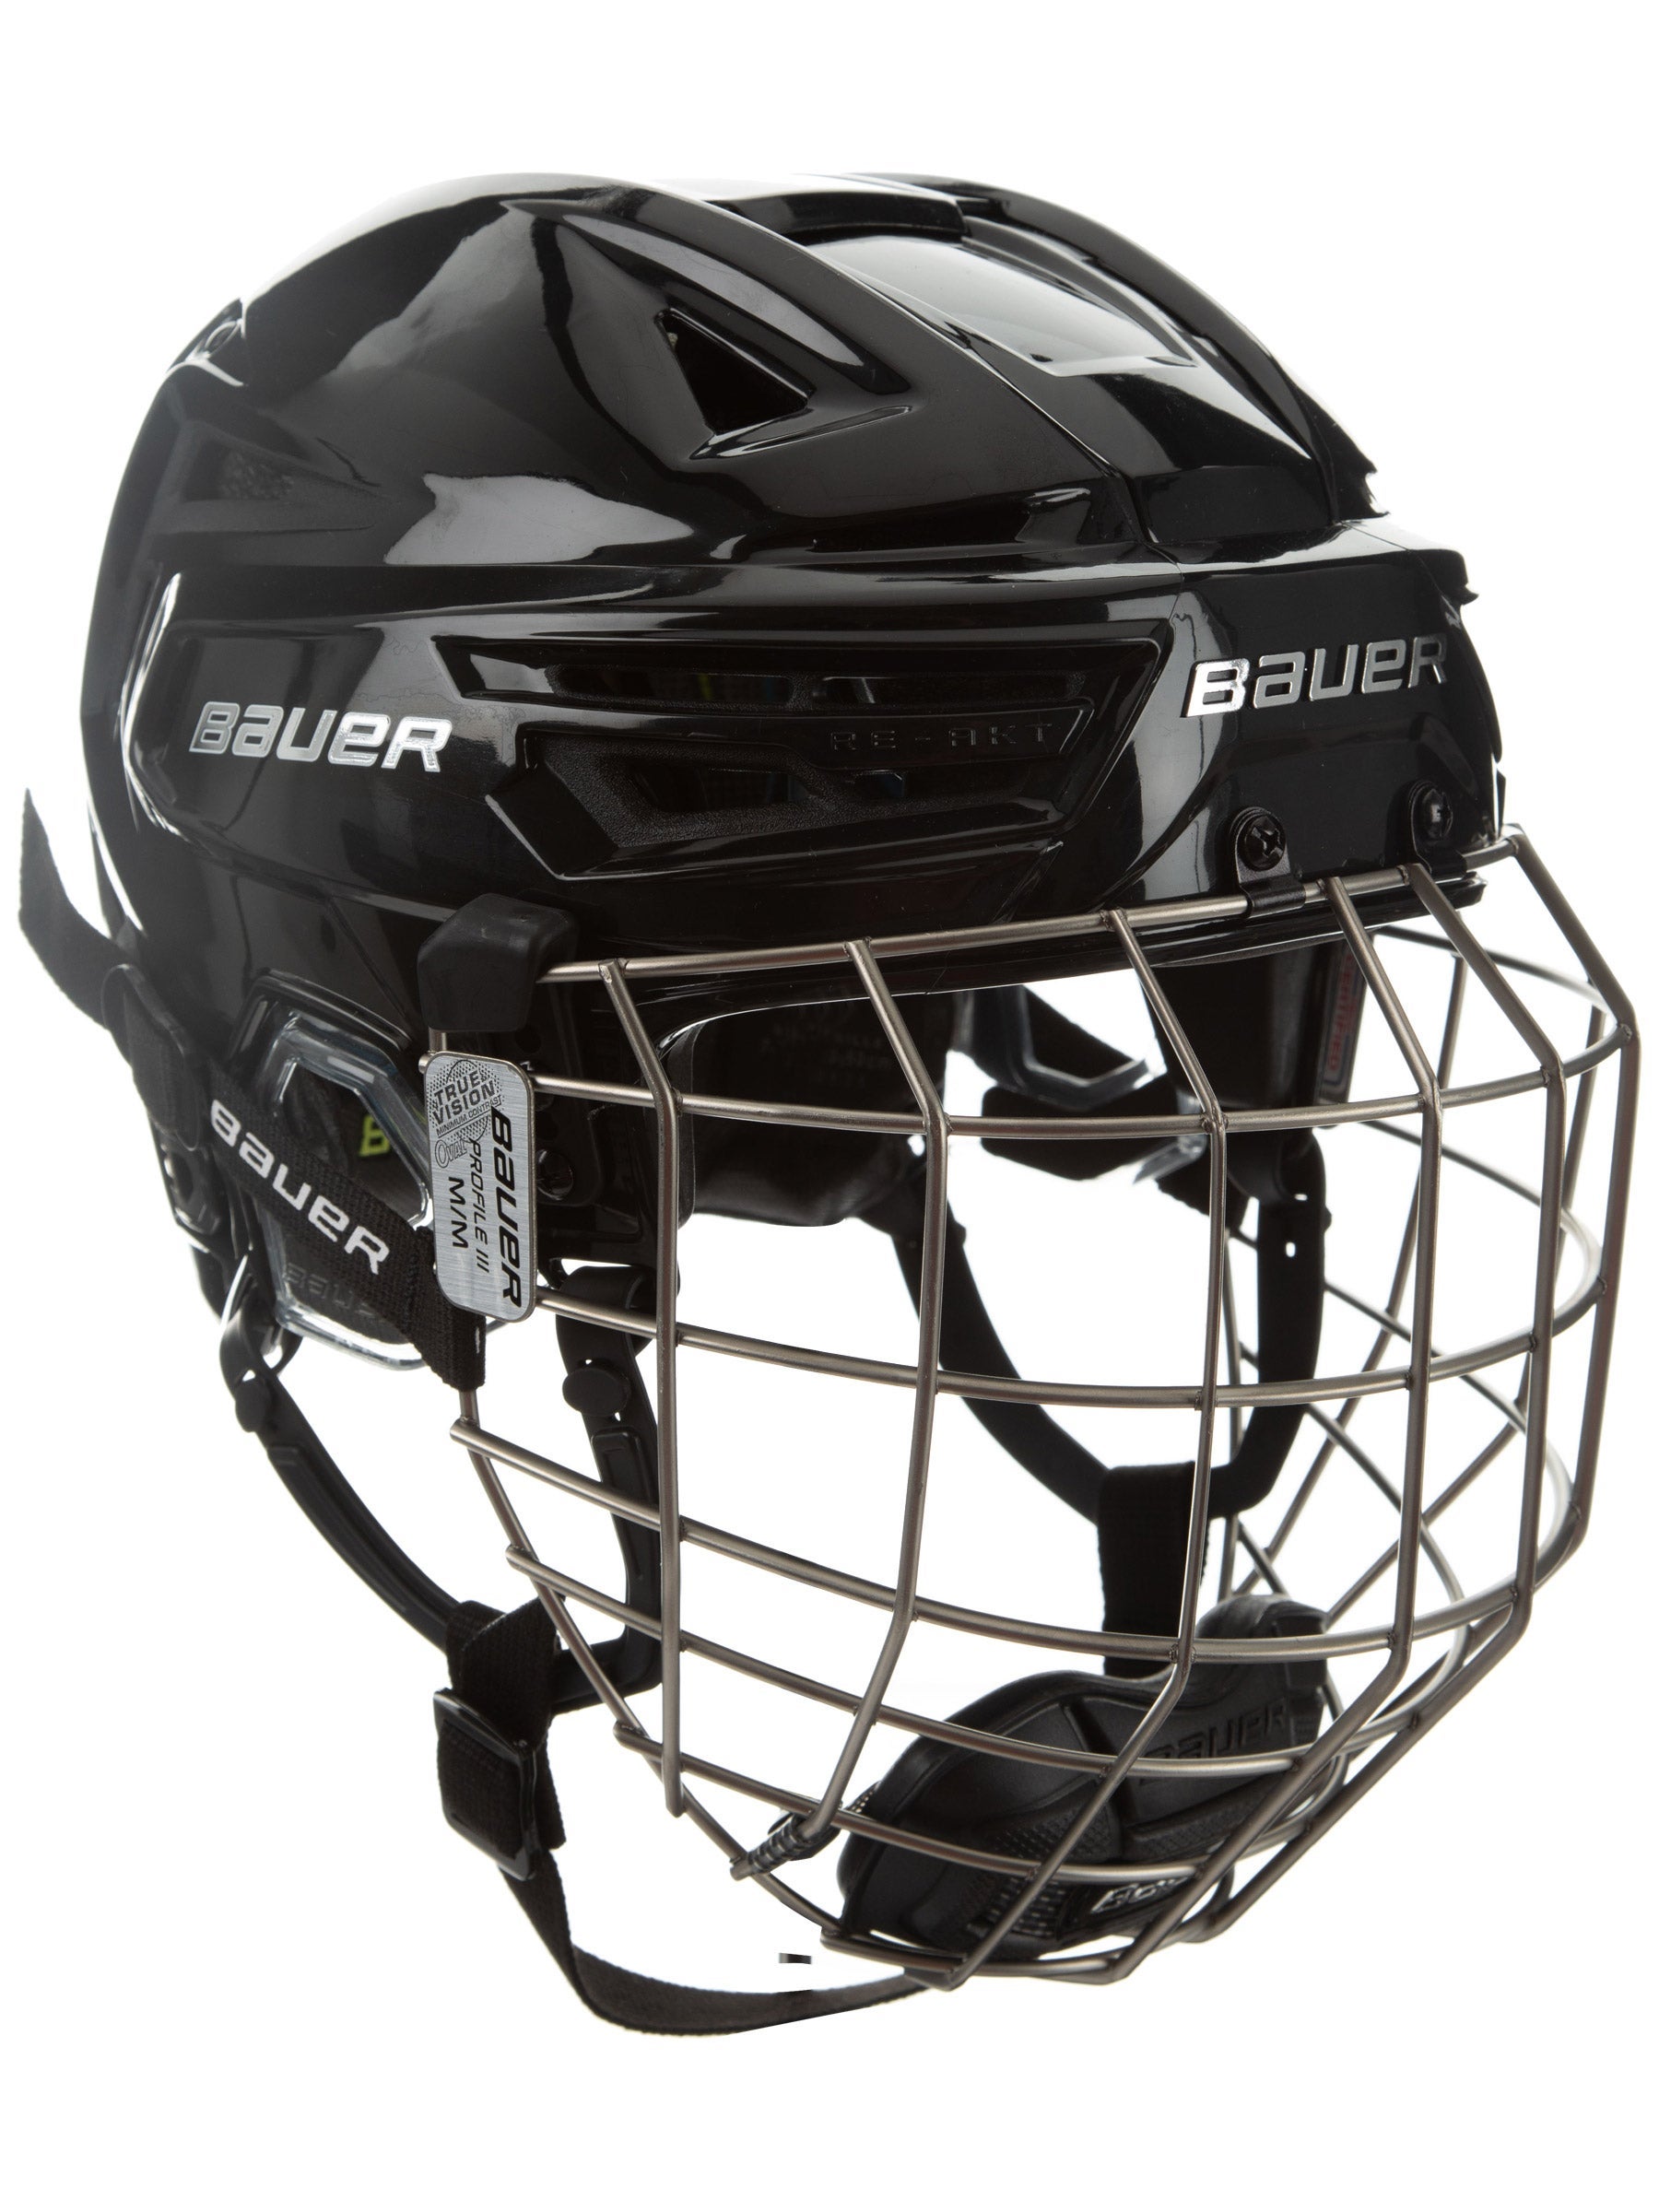 Bauer REAKT 150 Ice Hockey Helmet White Size SMALL Brand NEW In Box 